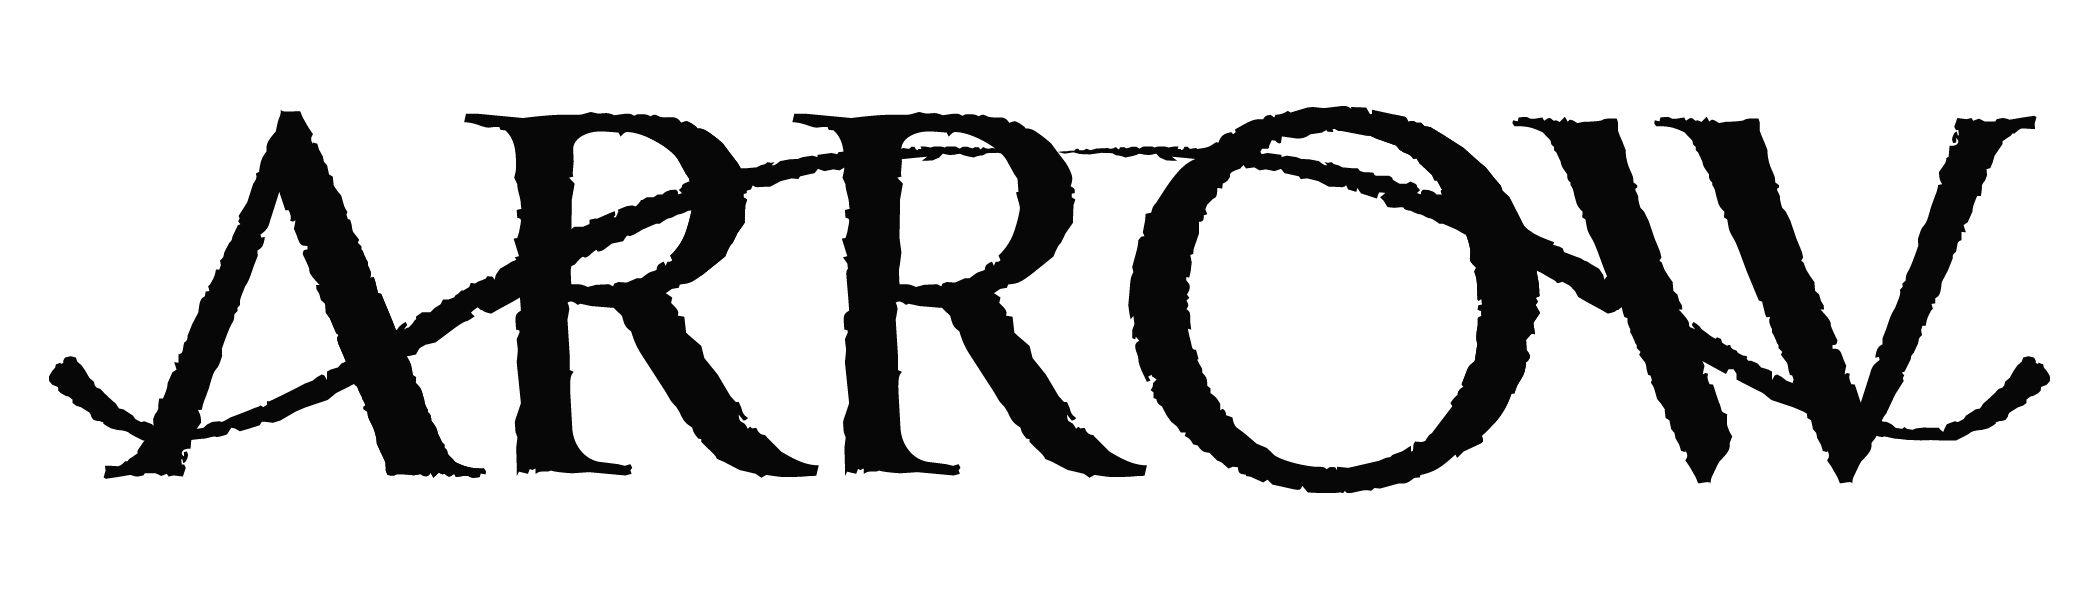 Arrow Show Logo - The arrow Logos